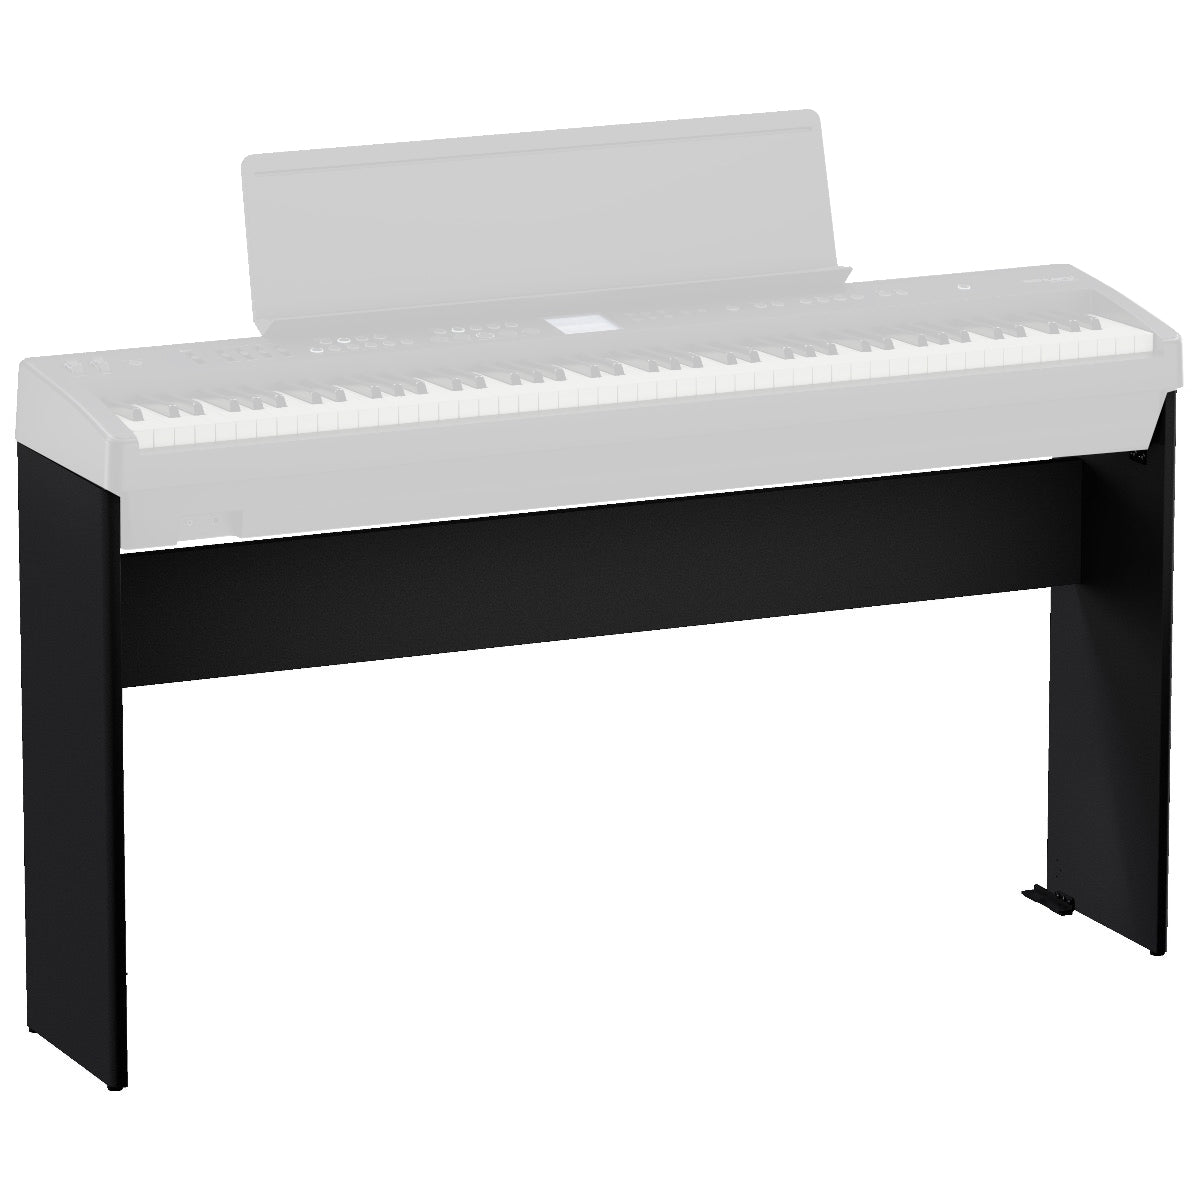 Roland KSFE50-BK Piano Stand - Black, View 1